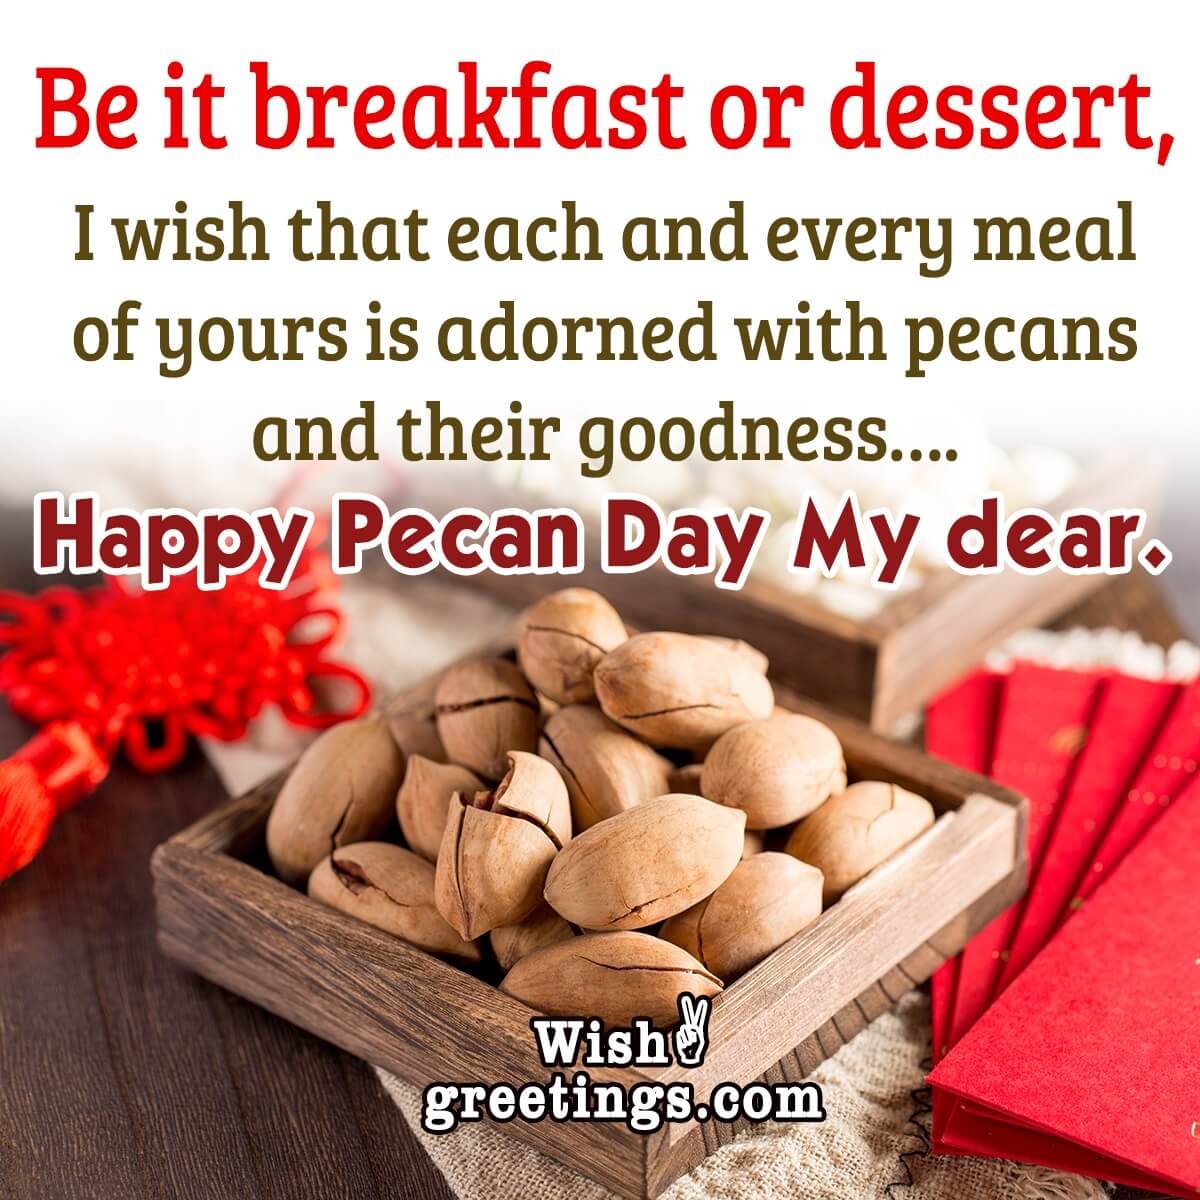 Happy Pecan Day My Dear